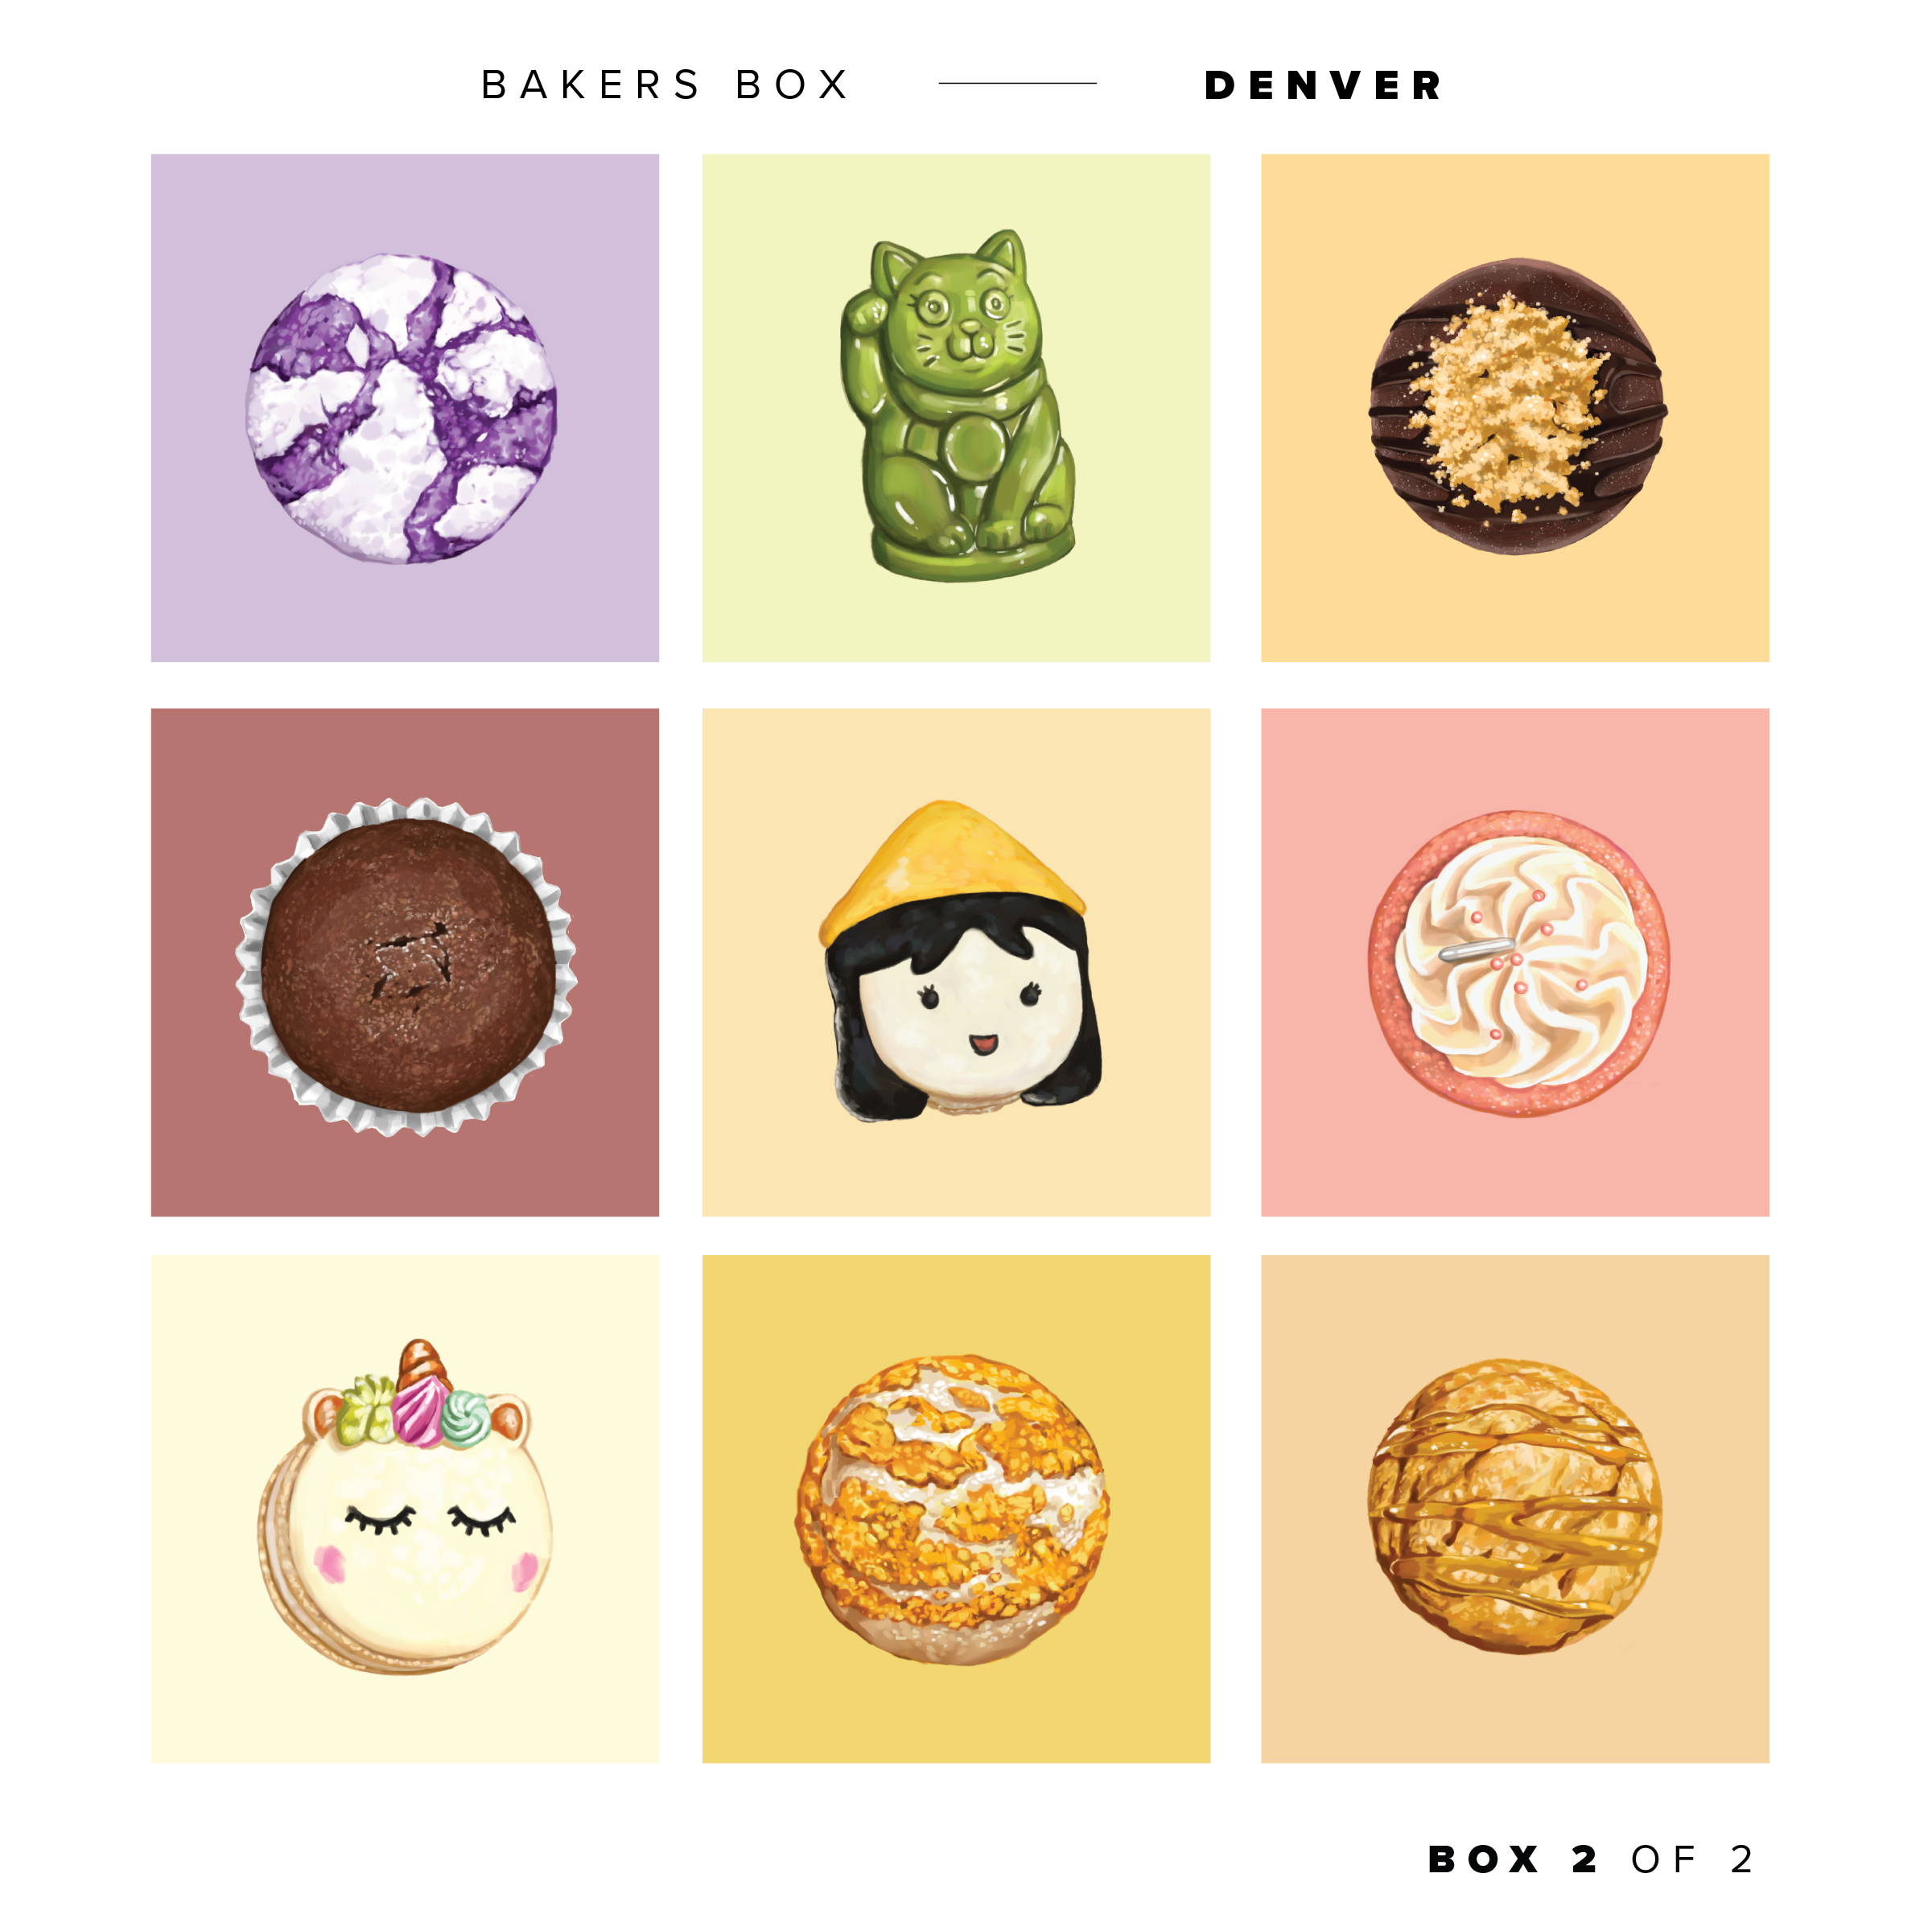 Denvers Bakers Box